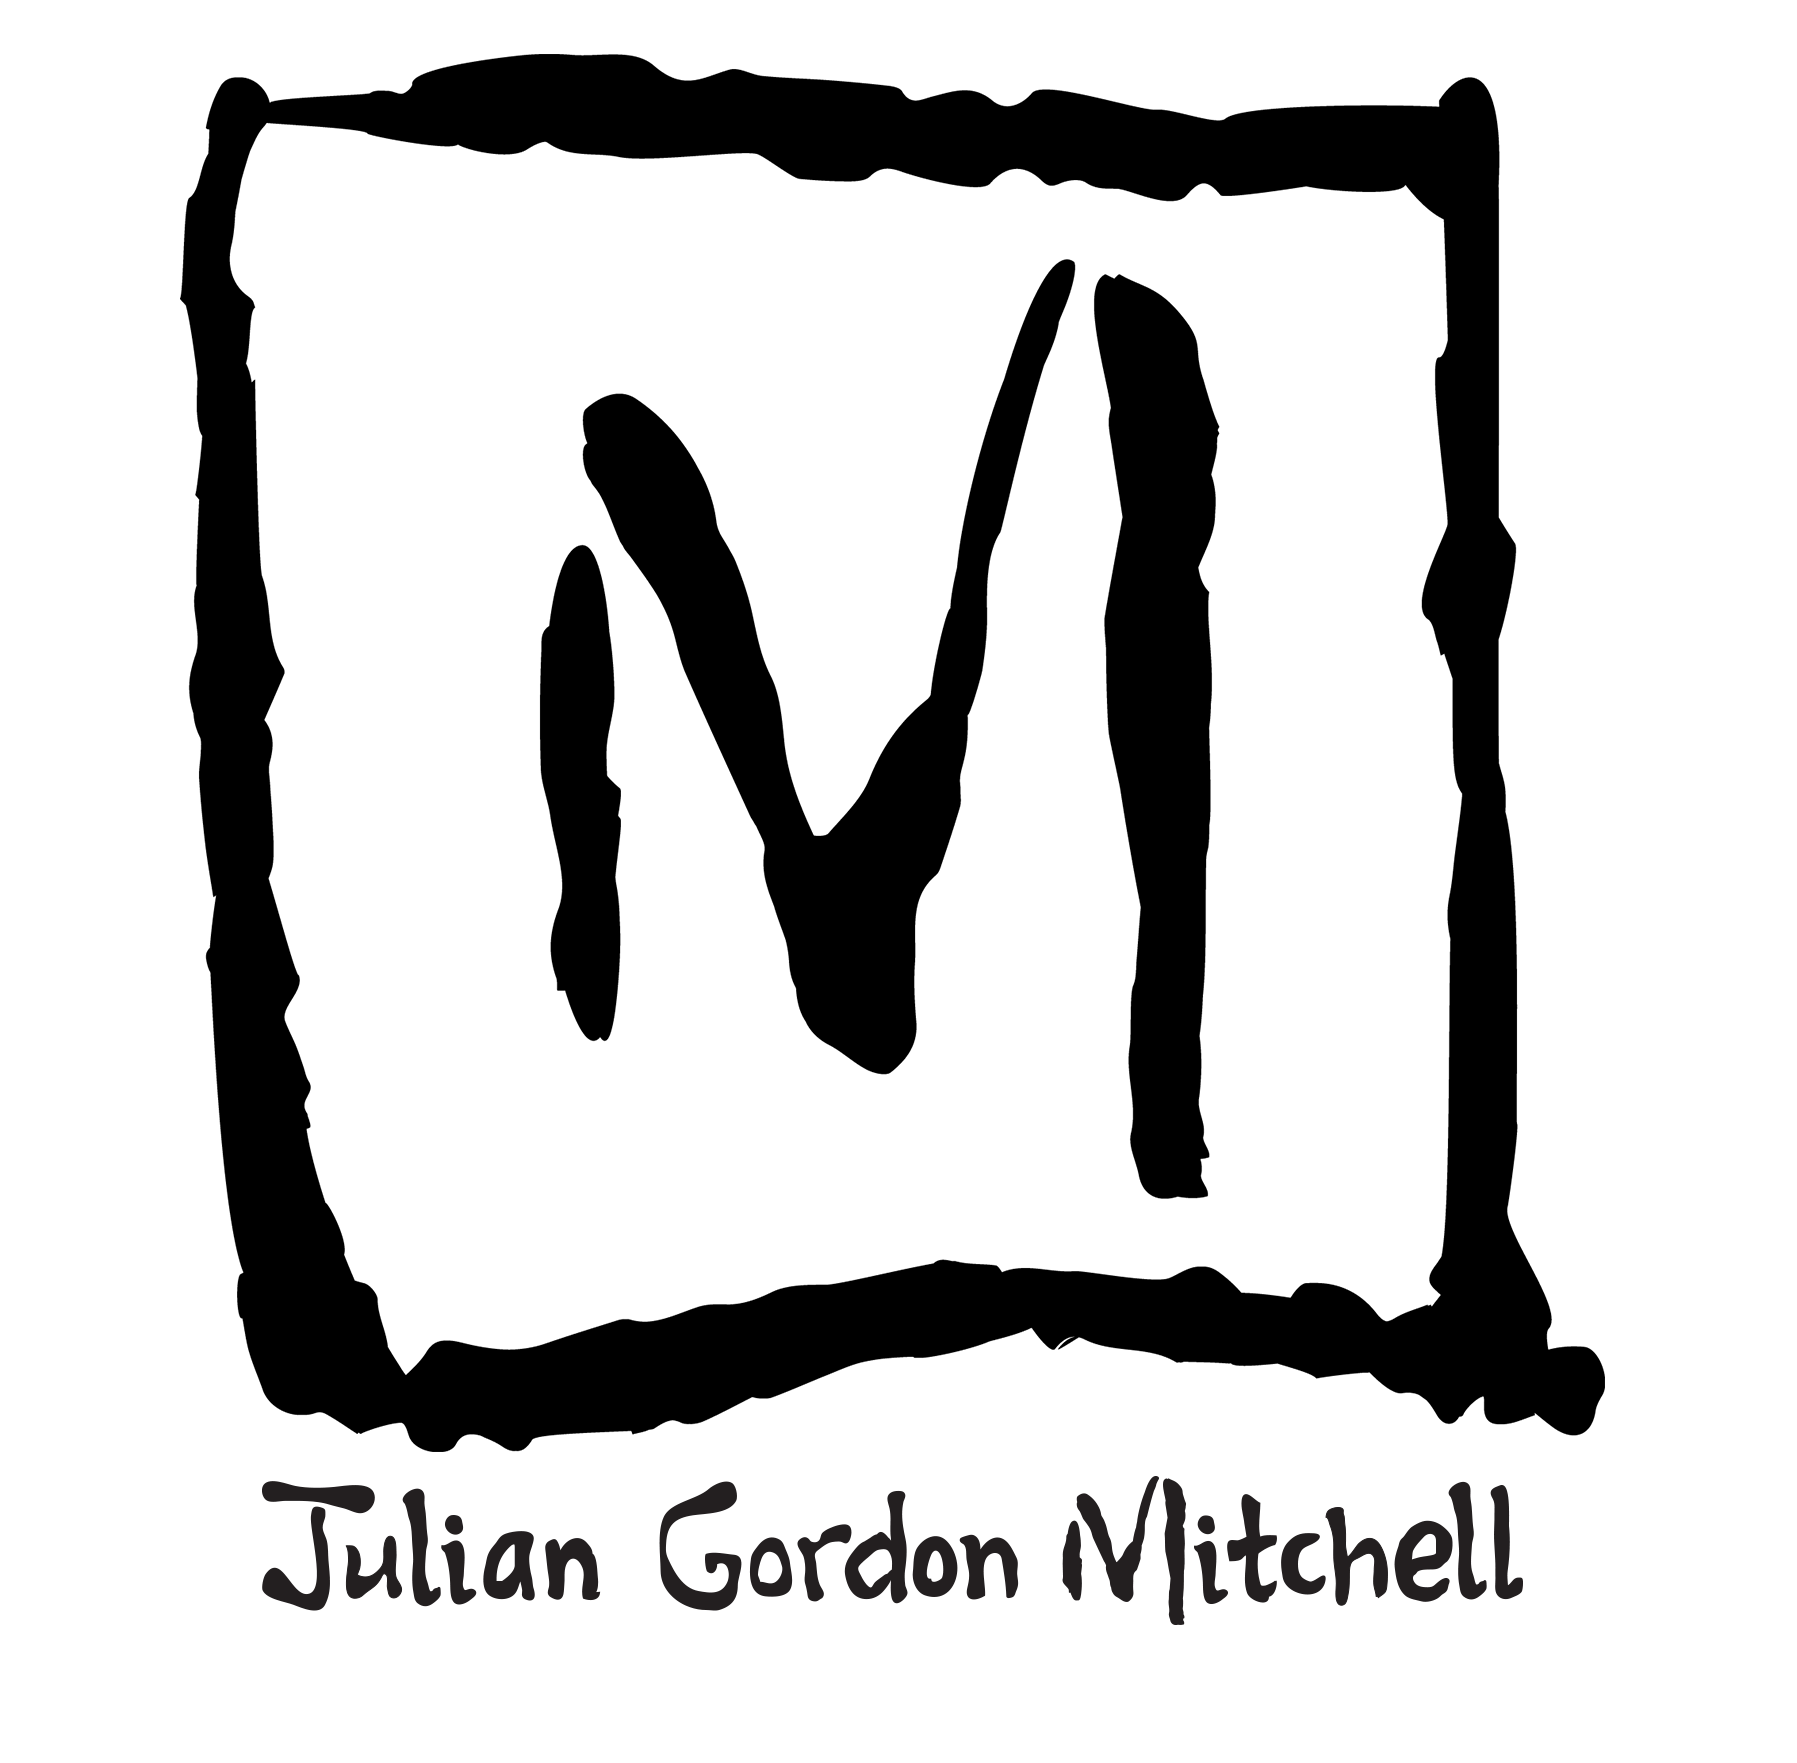 Julian Gordon Mitchell